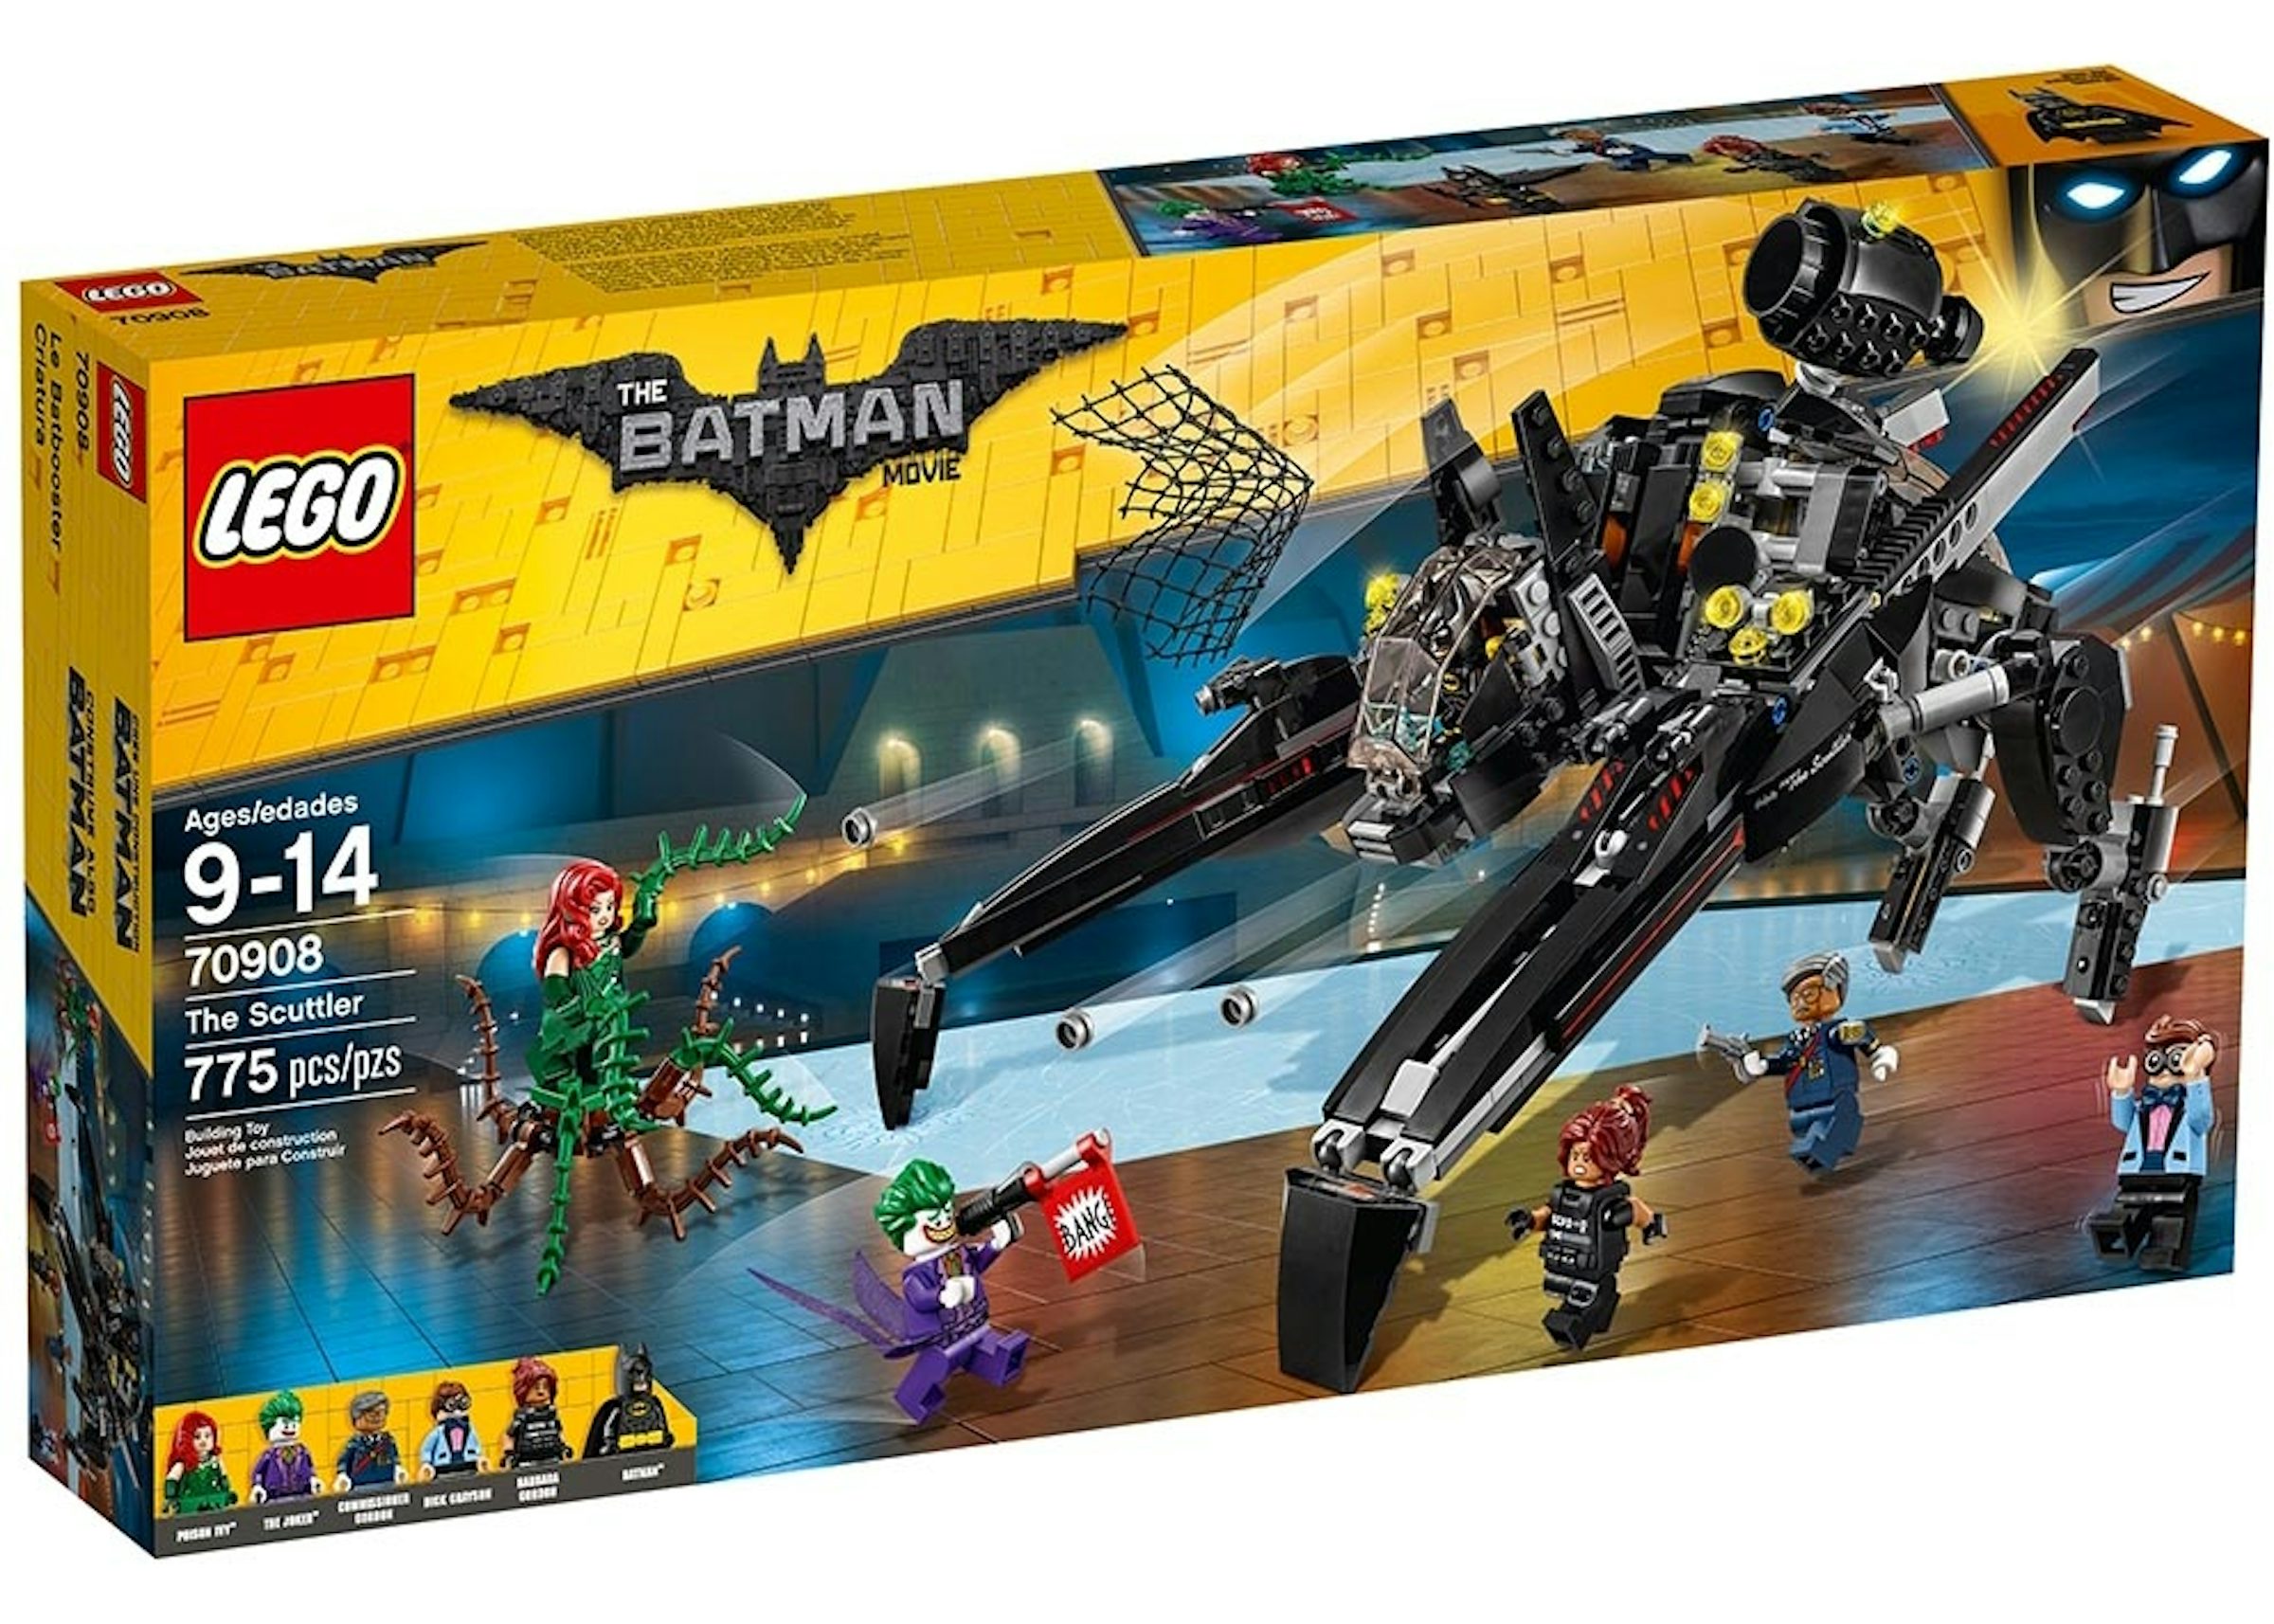 LEGO The LEGO Batman Movie The Scuttler Set 70908 - US